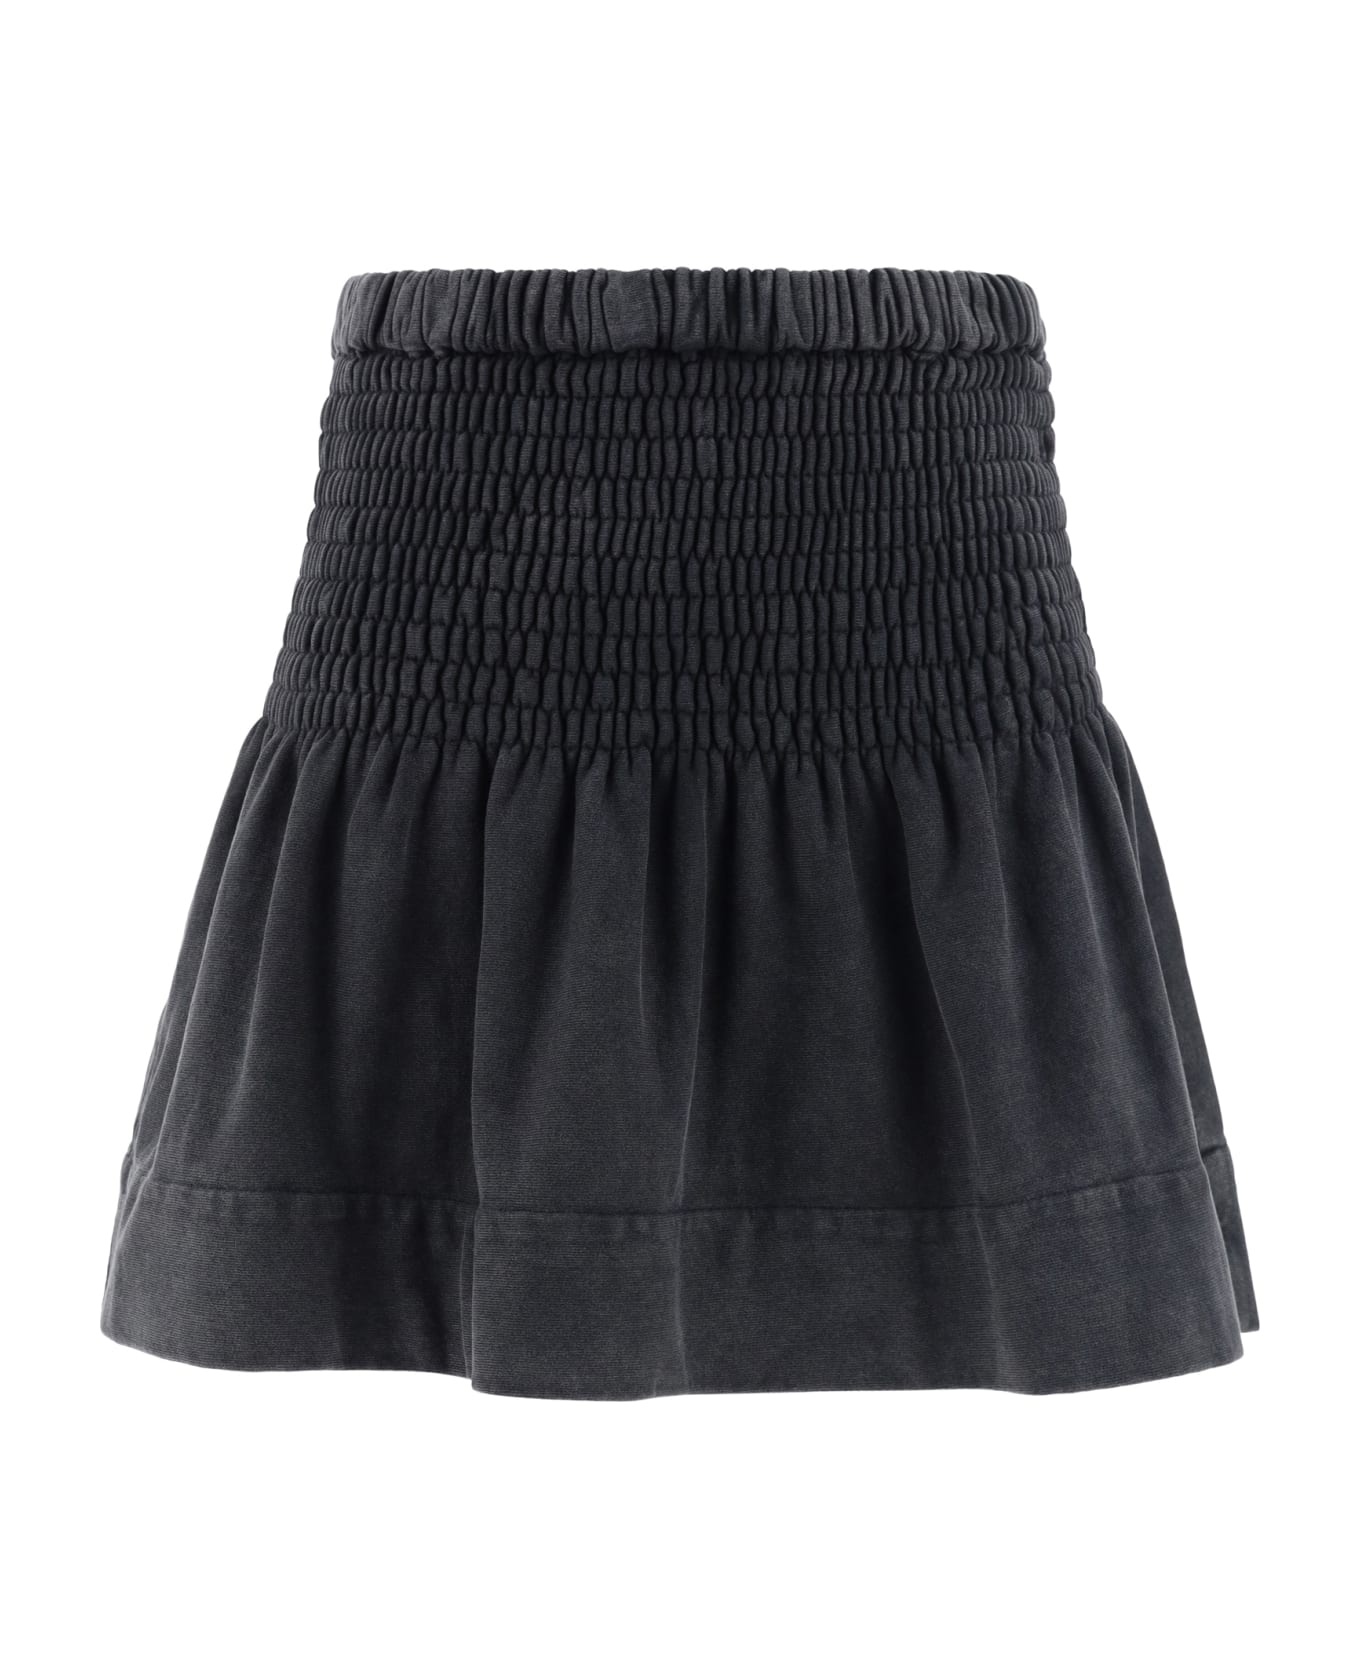 Marant Étoile Pacifica Mini Skirt - Faded Black